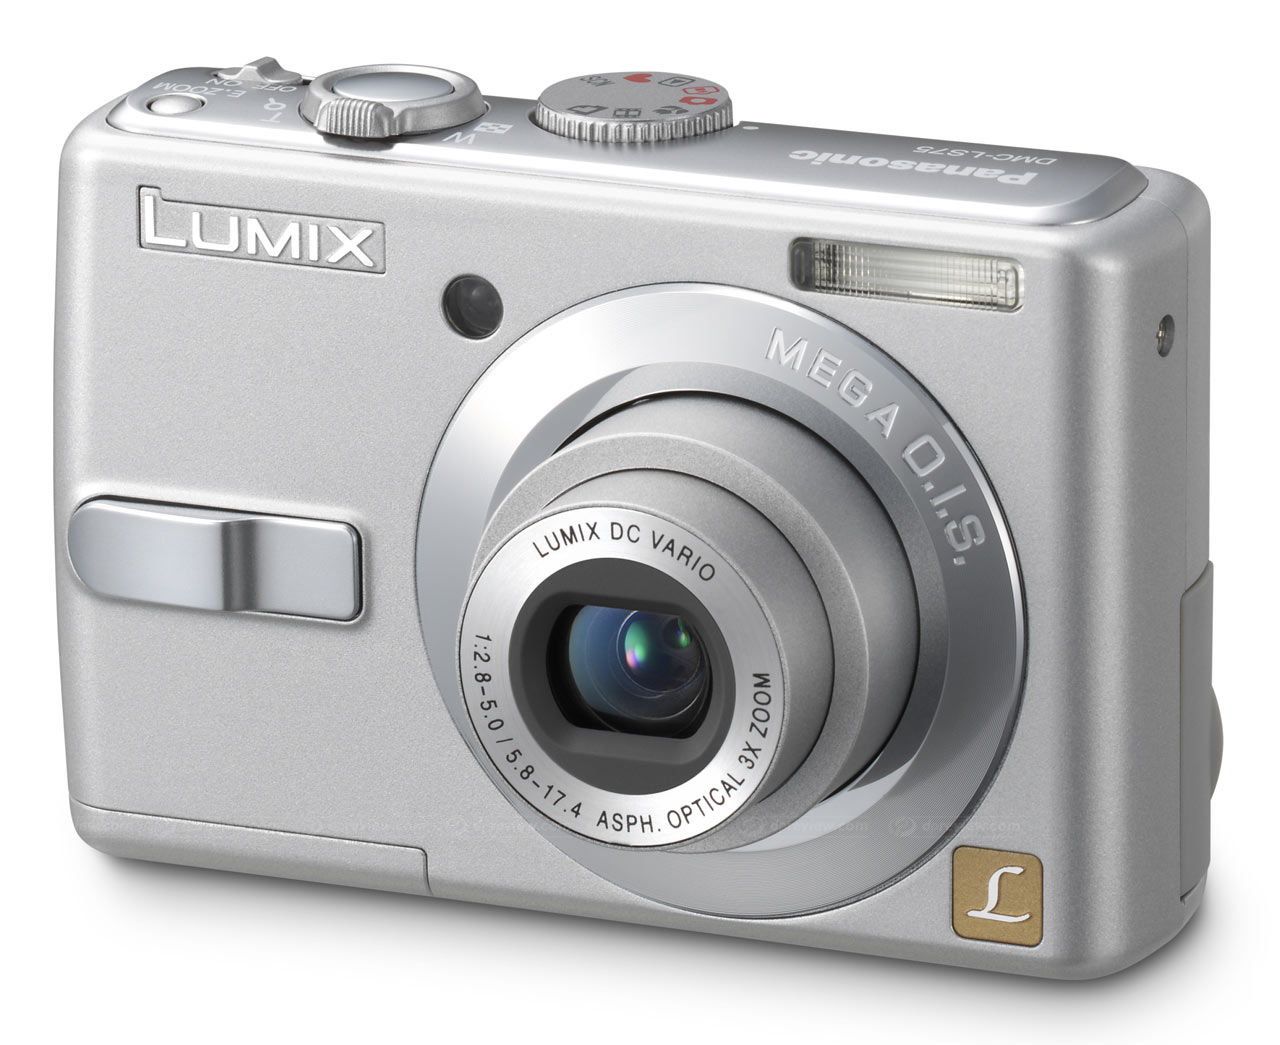 DMC-LS75 Digital Still Camera	Panasonic-LUMIX